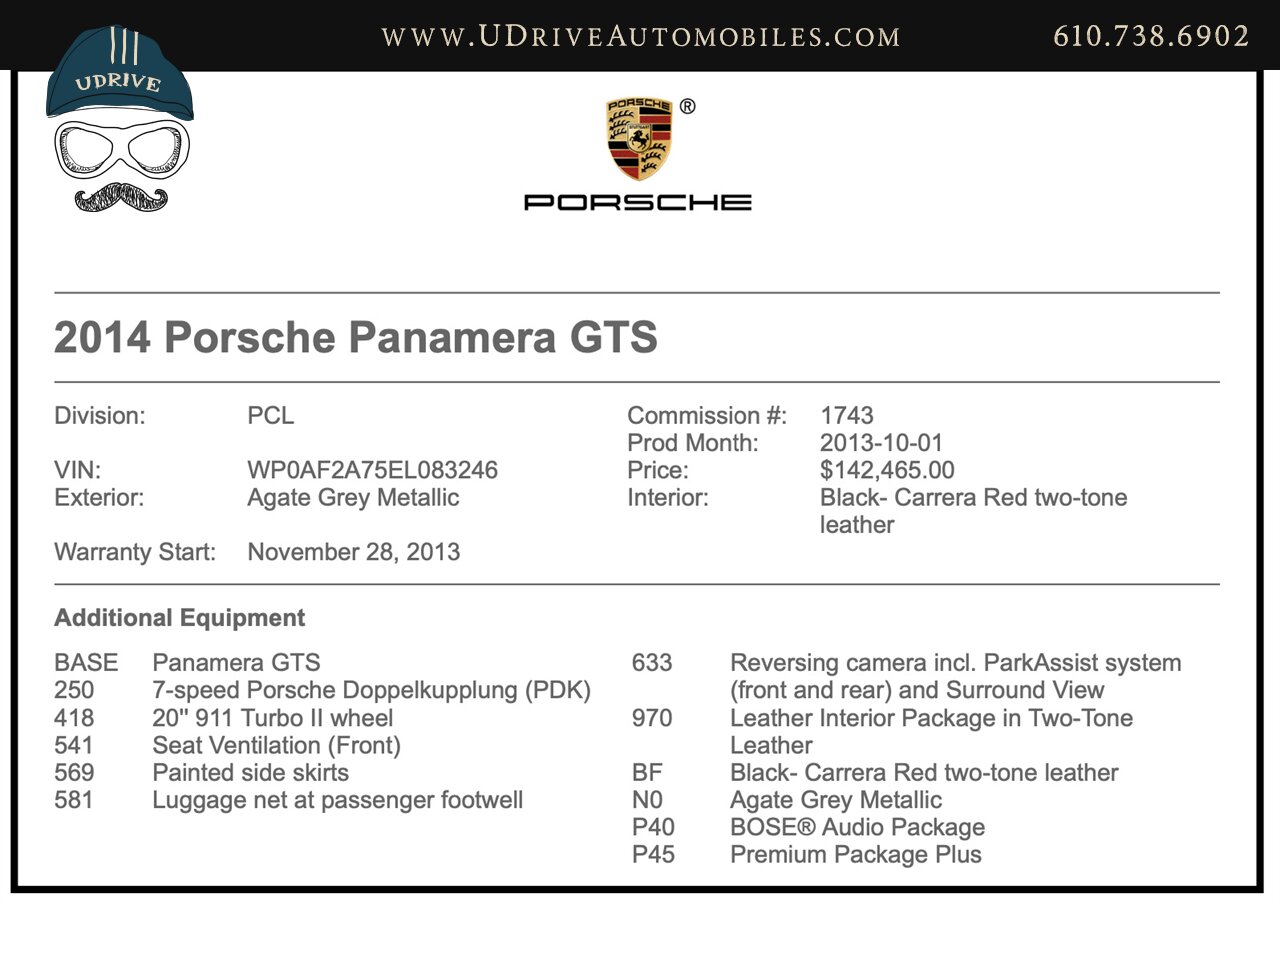 2014 Porsche Panamera GTS 2 Tone Lthtr Pkg Black/Carrera Red Interior  Vent Seats Painted Side Skirts 20in Turbo II Whls Cam Park Asst Surround View Prem Plus - Photo 2 - West Chester, PA 19382